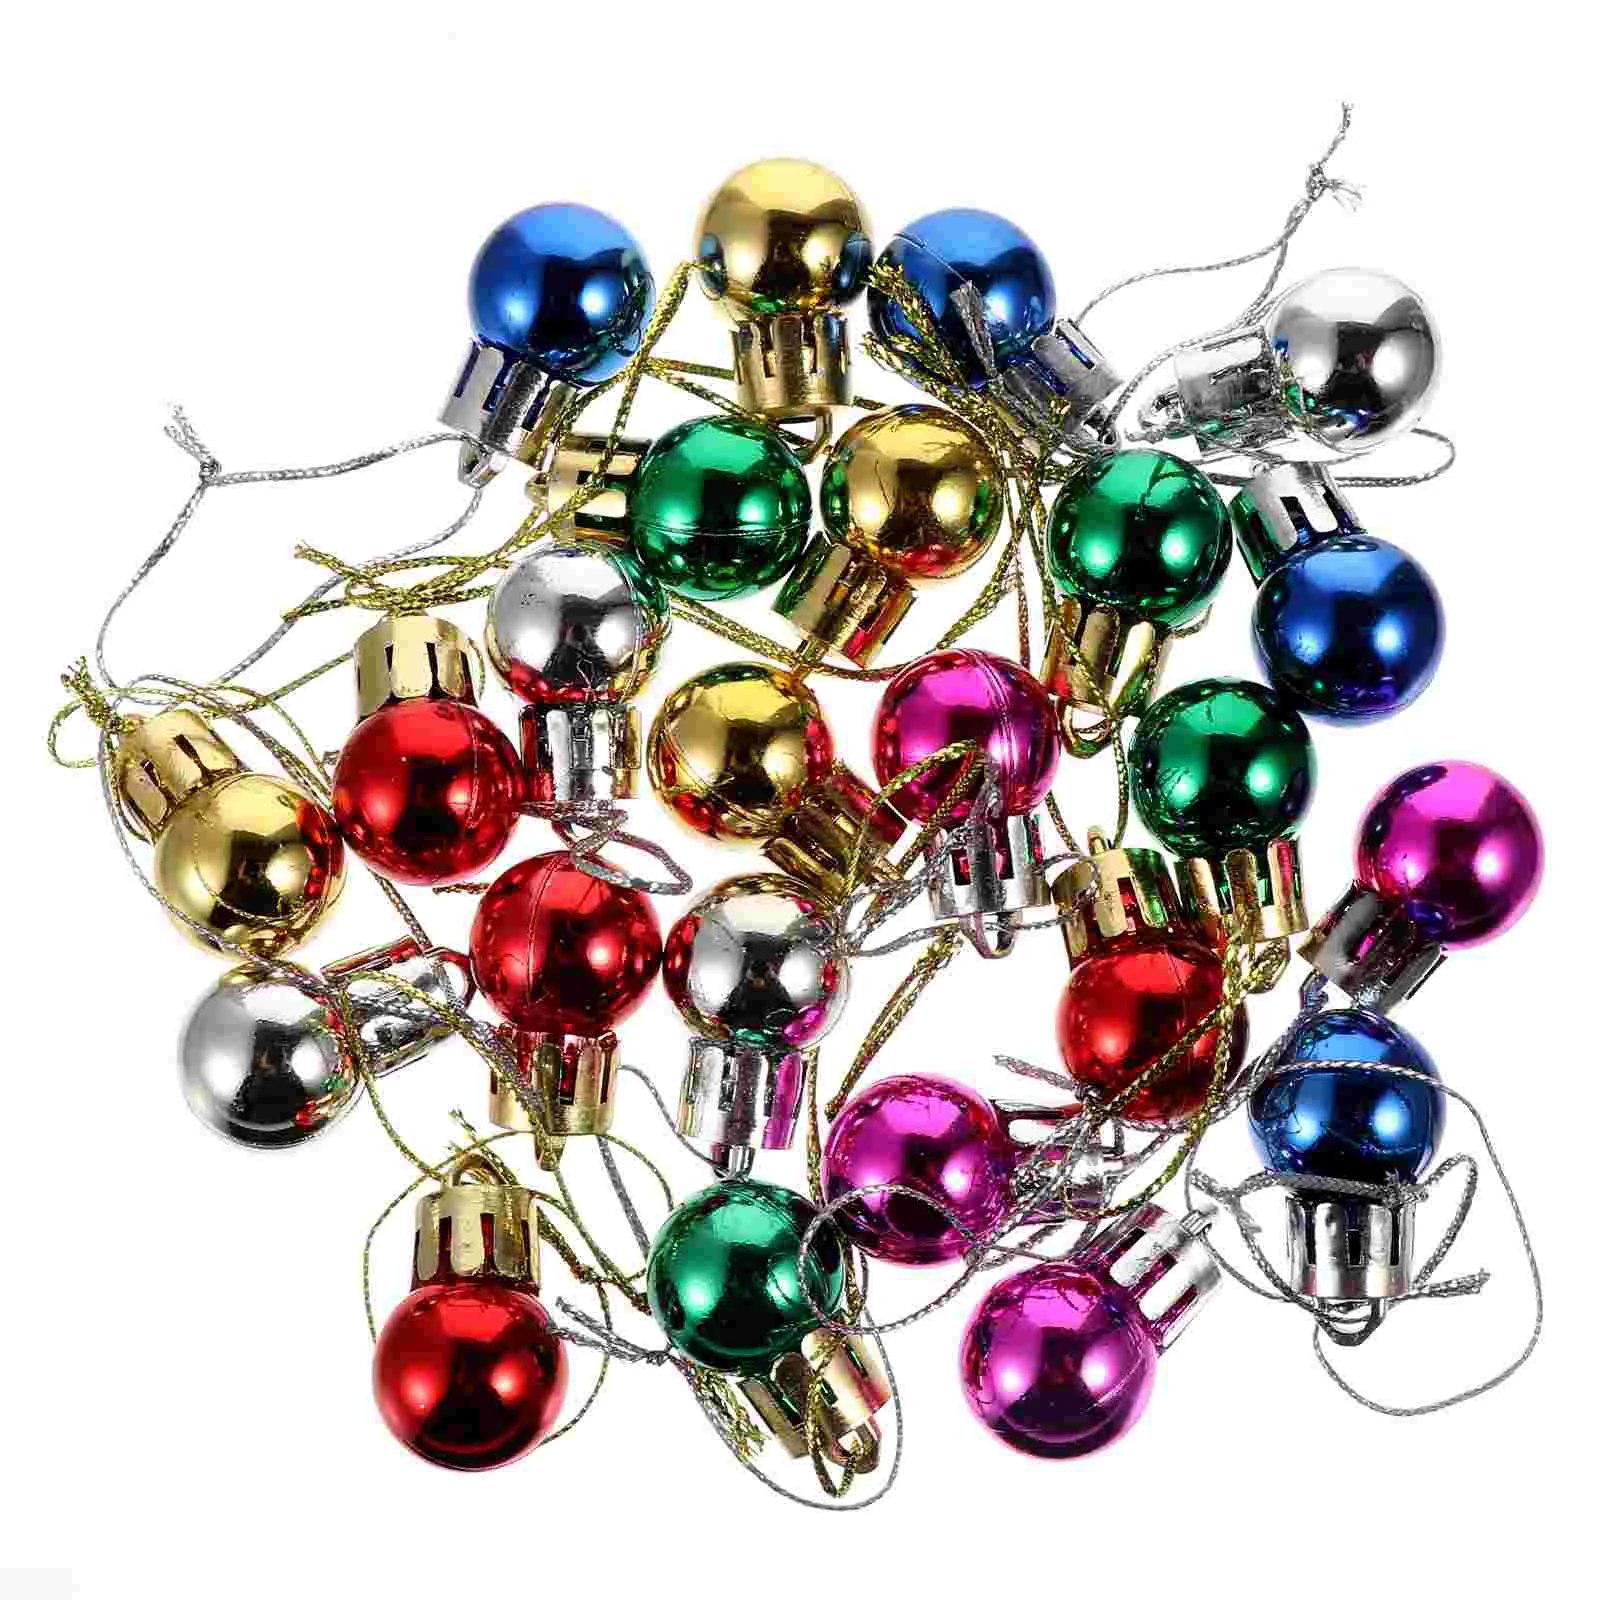 

96 Pcs Christmas Tree Decoration Balls Pendant Decorate Hanging Plastic Supplies Decorations New year's eve